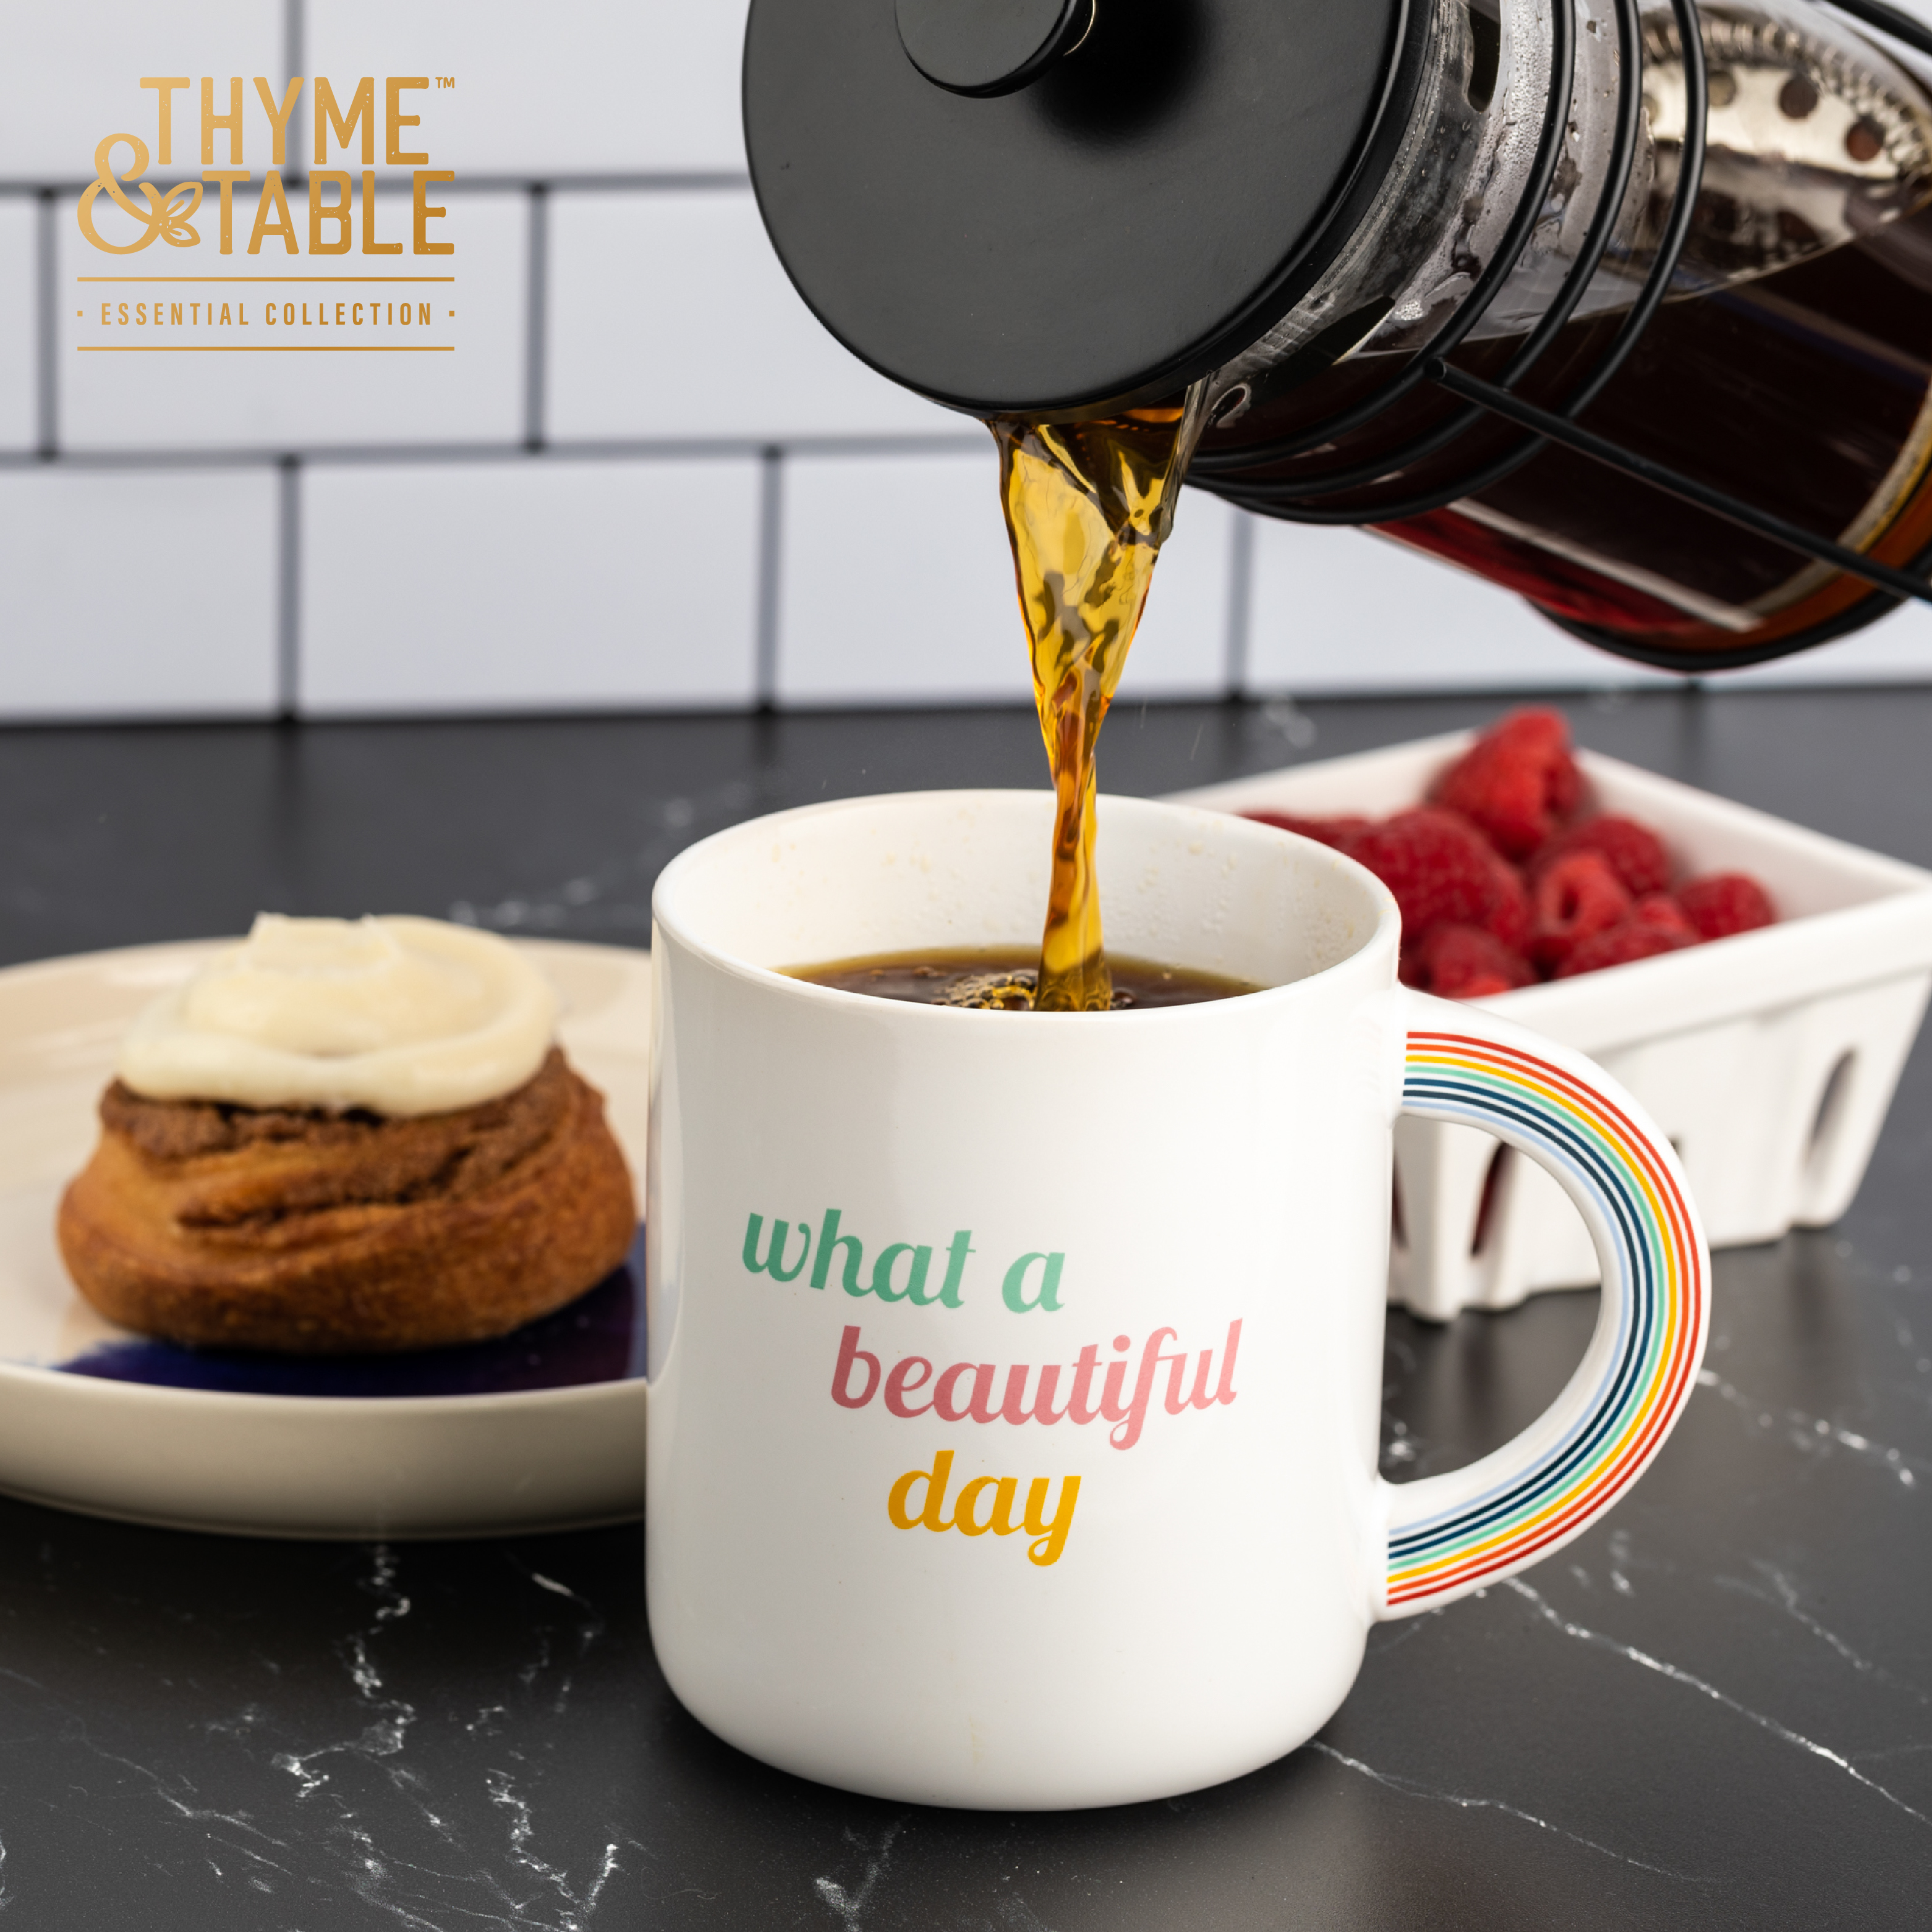 Thyme & Table Beautiful Day Ceramic Coffe Mug, 20 fl oz - image 3 of 6